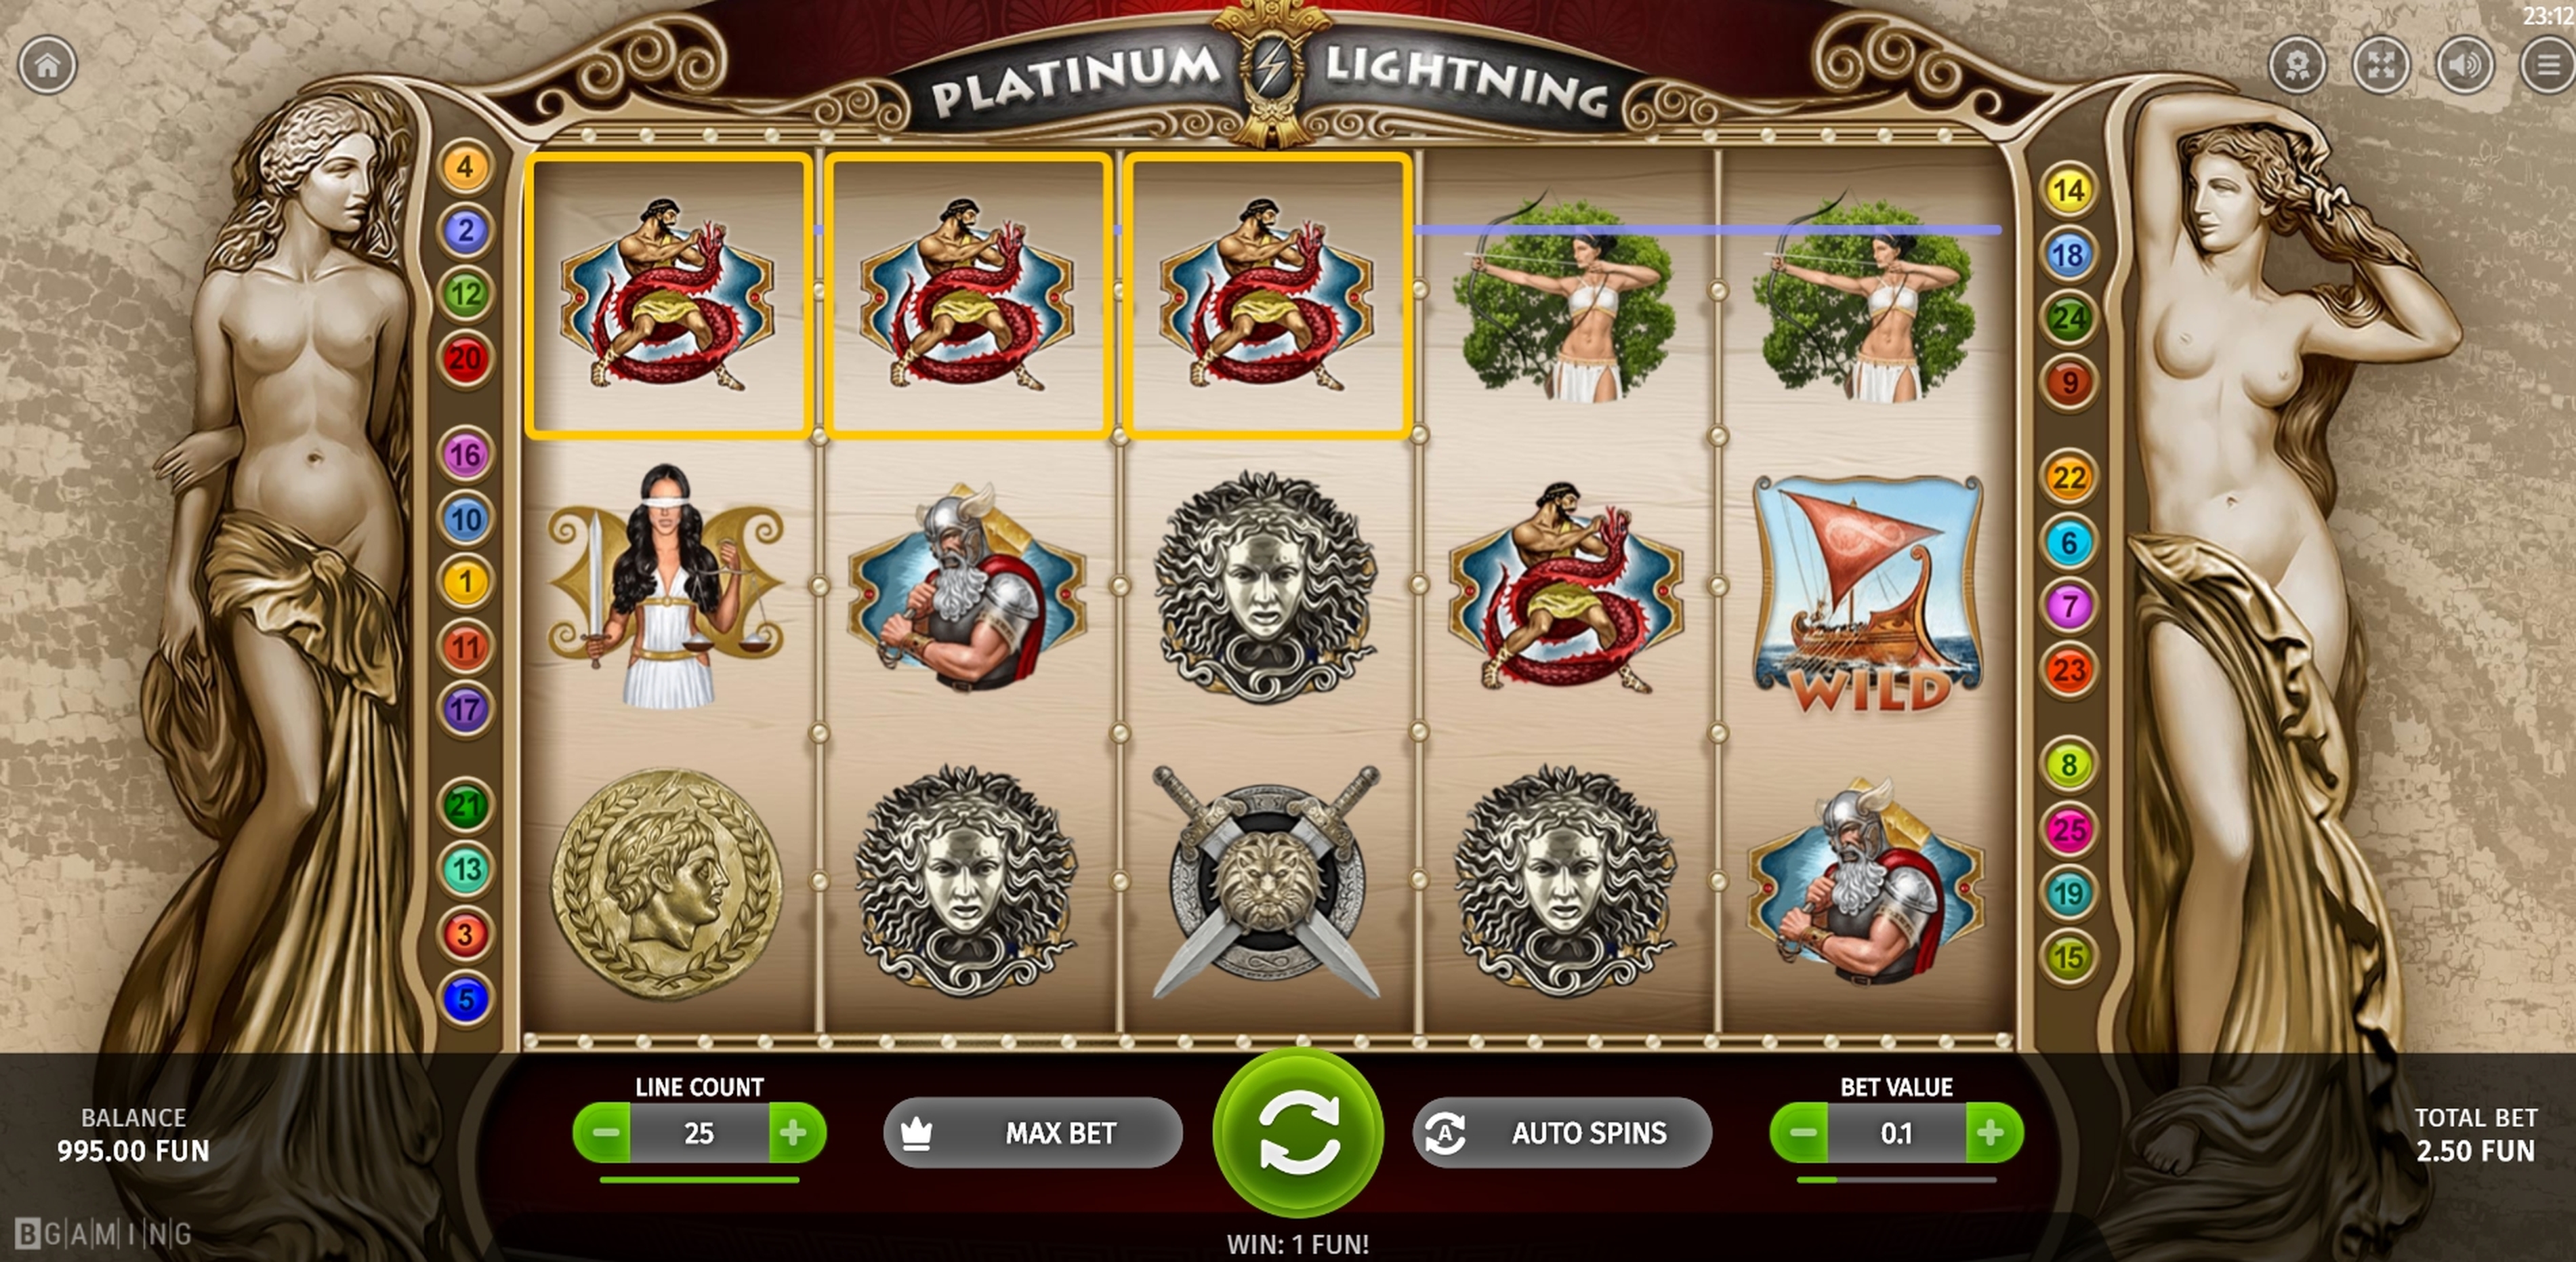 Win Money in Platinum Lightning Free Slot Game by BGAMING